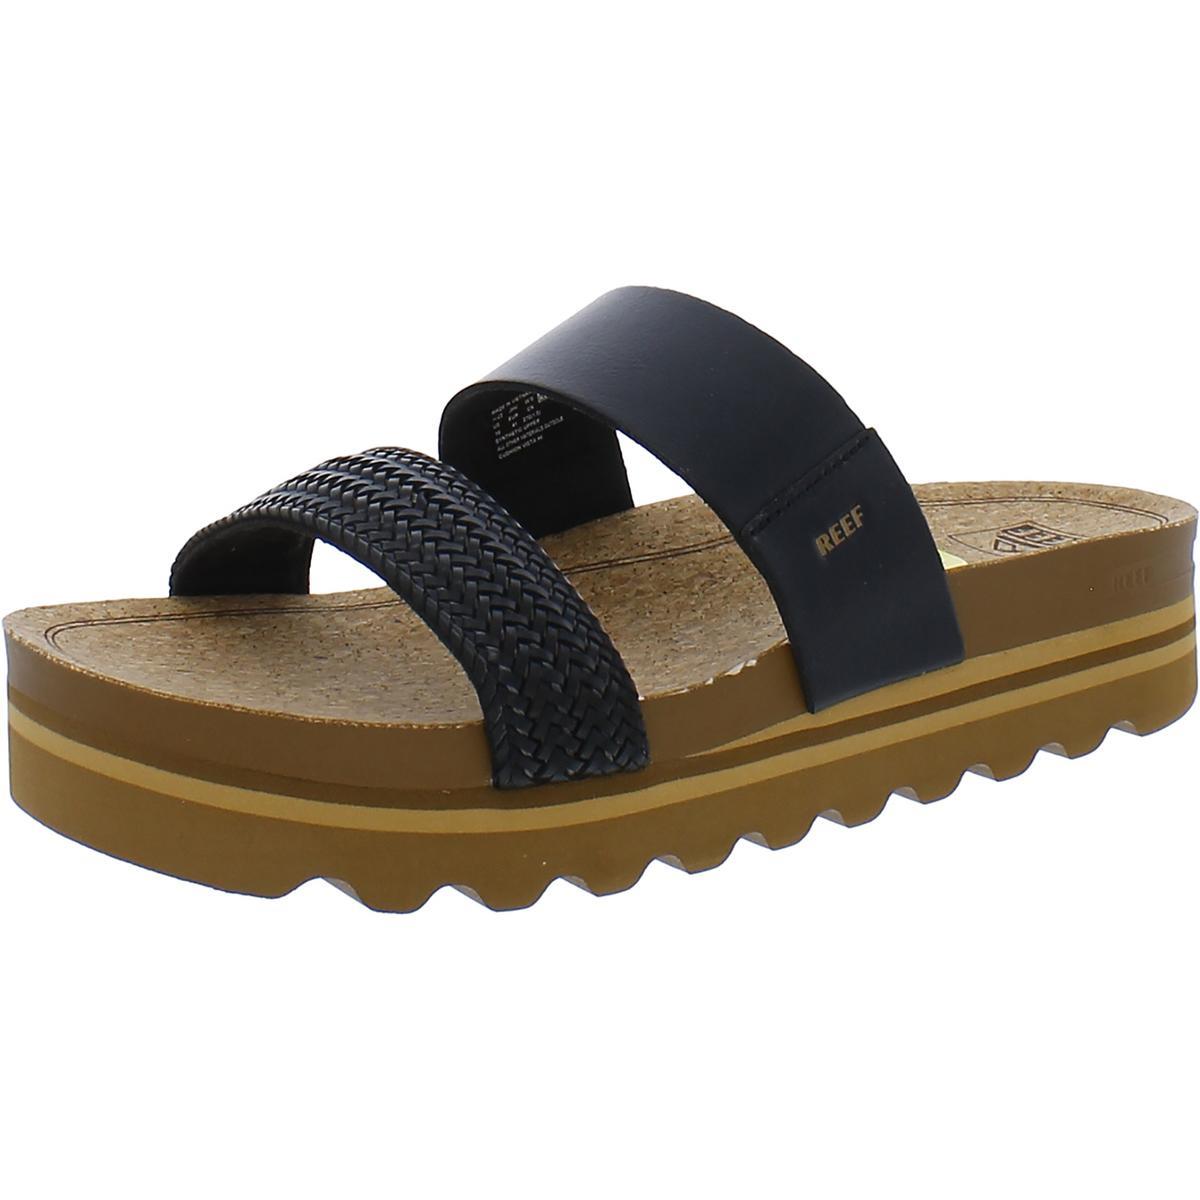 Reef Womens Cushion Vista Hi Padded Insole Slide Sandals Shoes Bhfo 9048 Black Braid